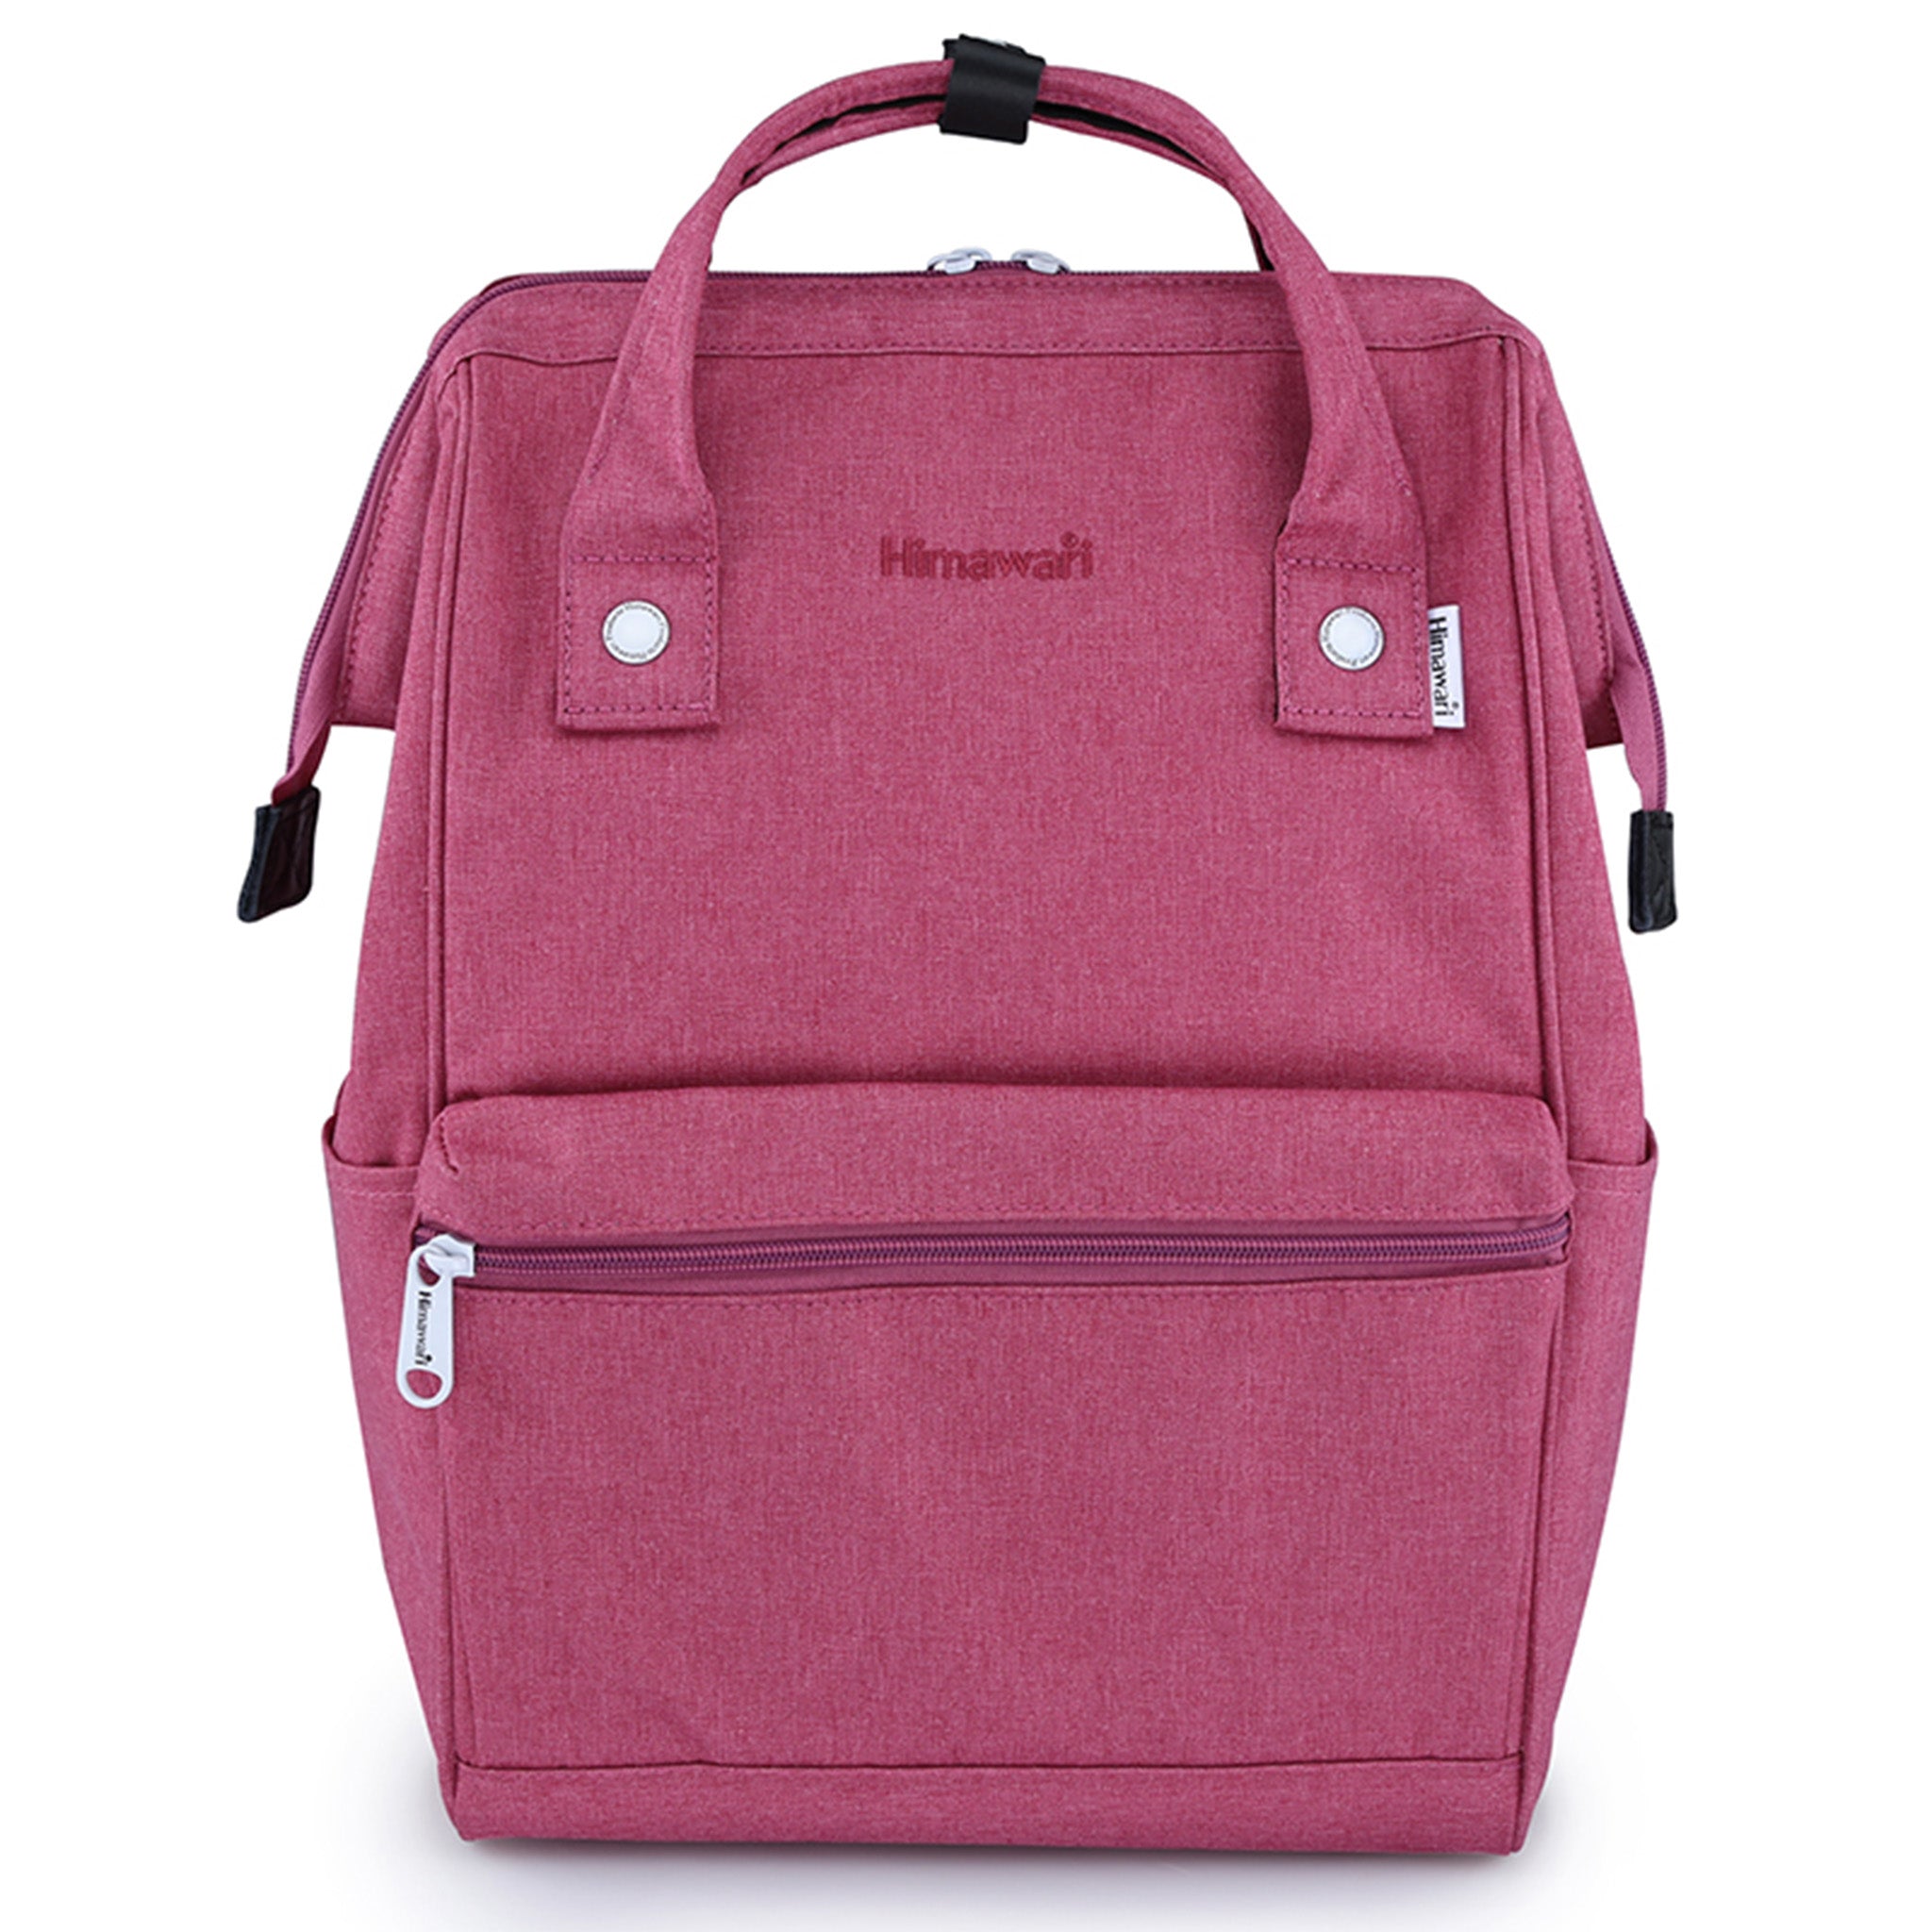 Himawari Laptop Backpack with USB - Rose Red